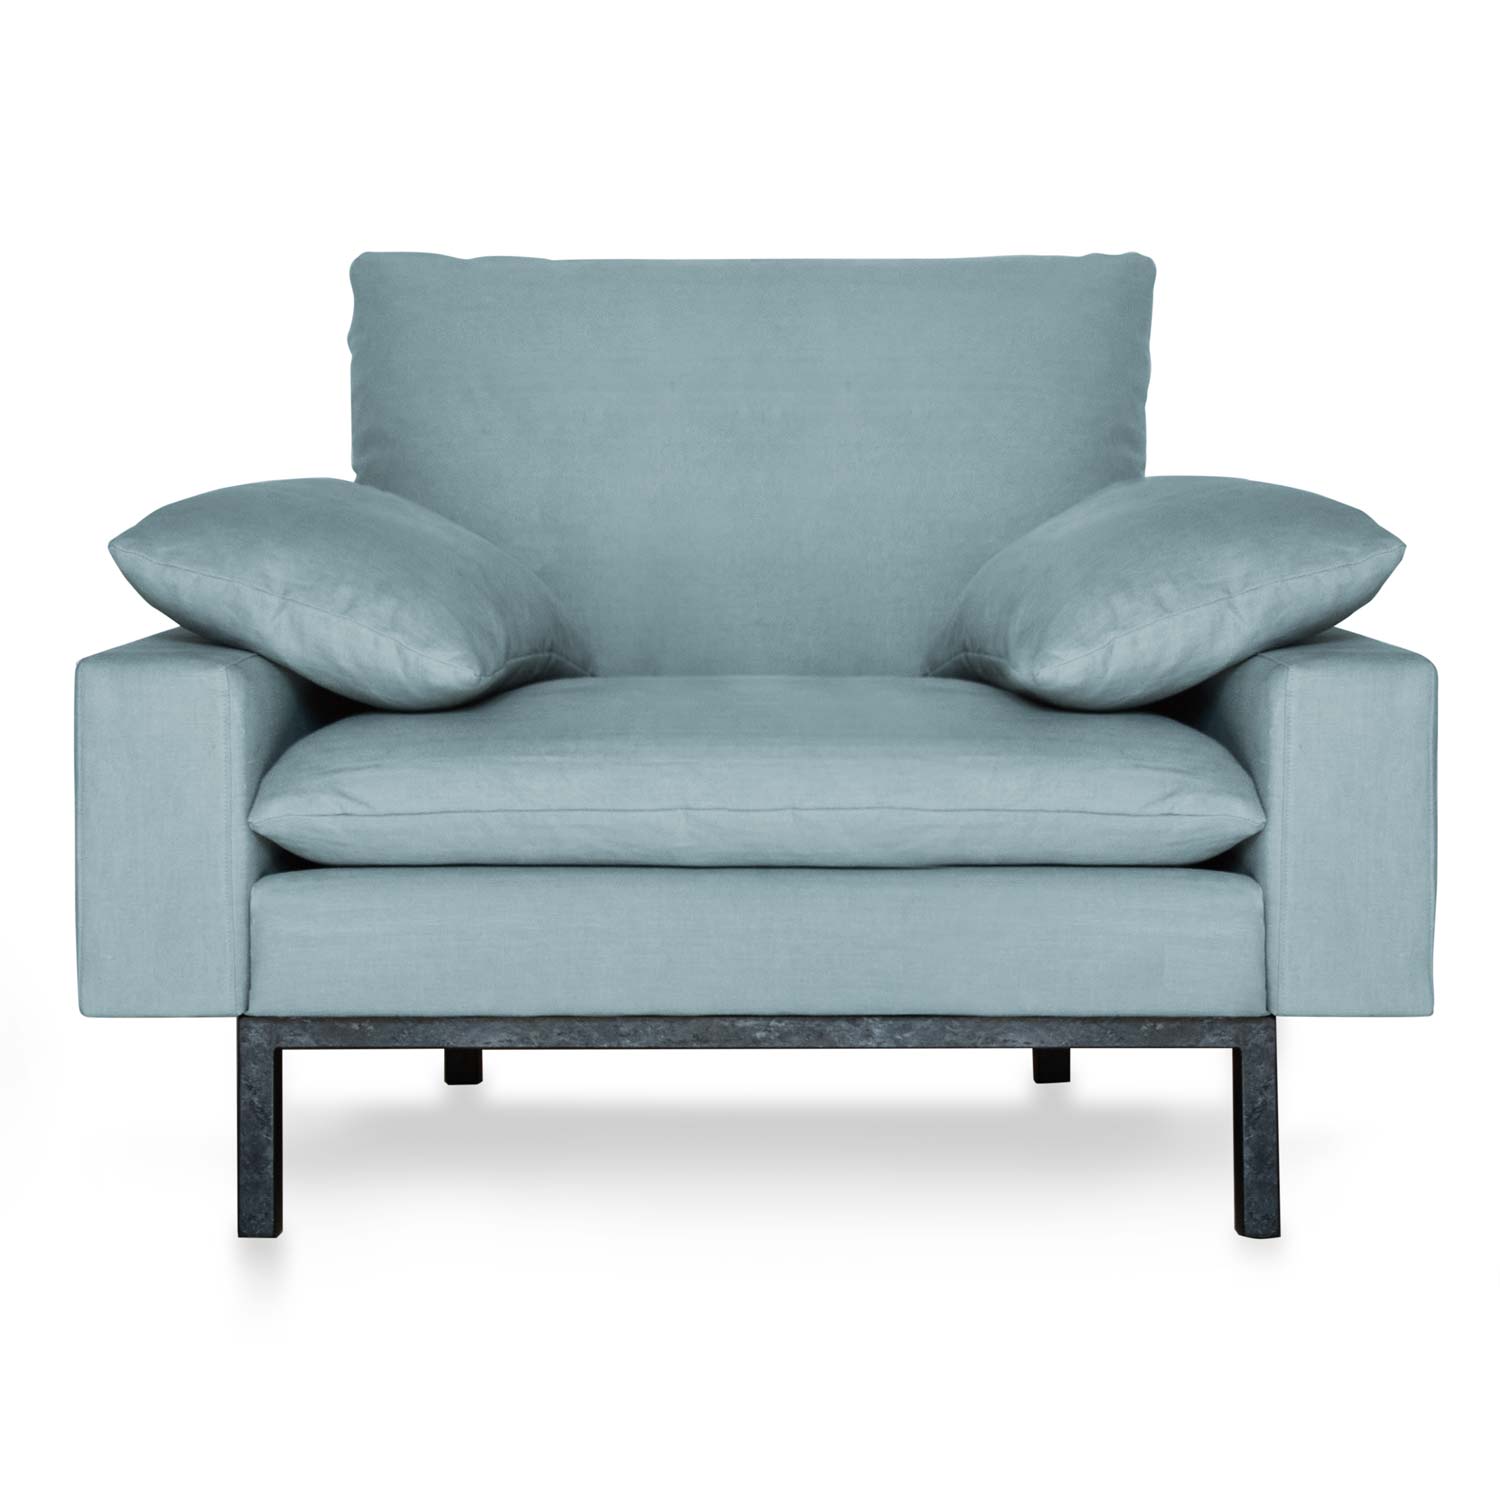 Customizable Upholstery Options. light green cotton armchair.